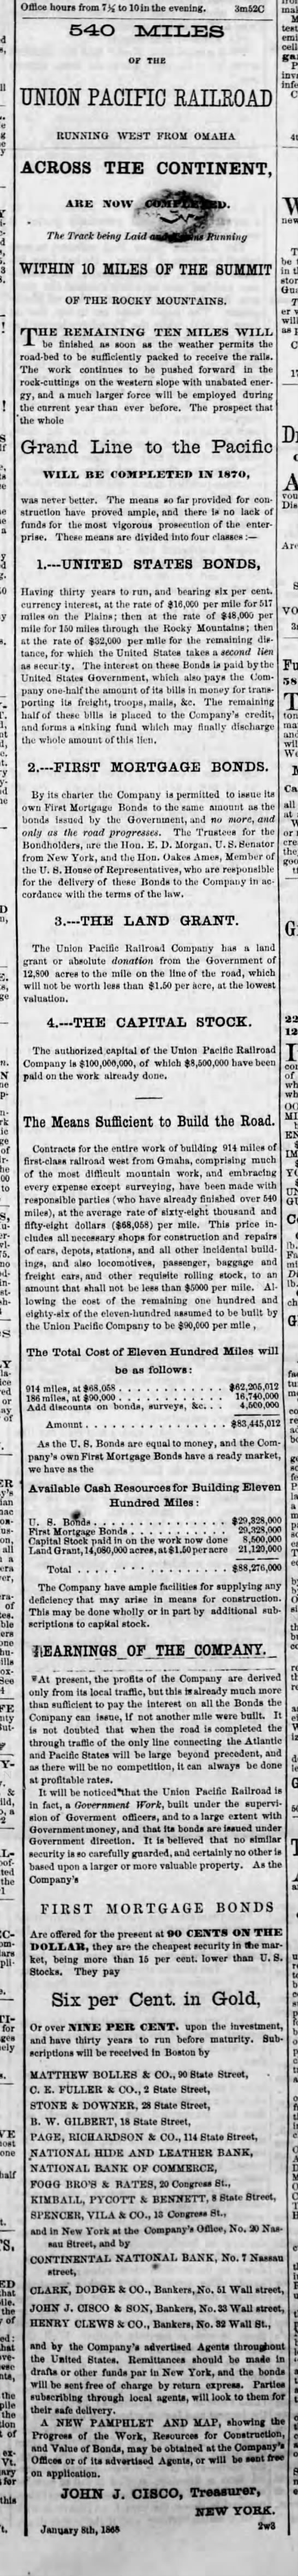 Ad for Union Pacific Railroad bonds for building of Transcontinental Railroad, 1868 - 